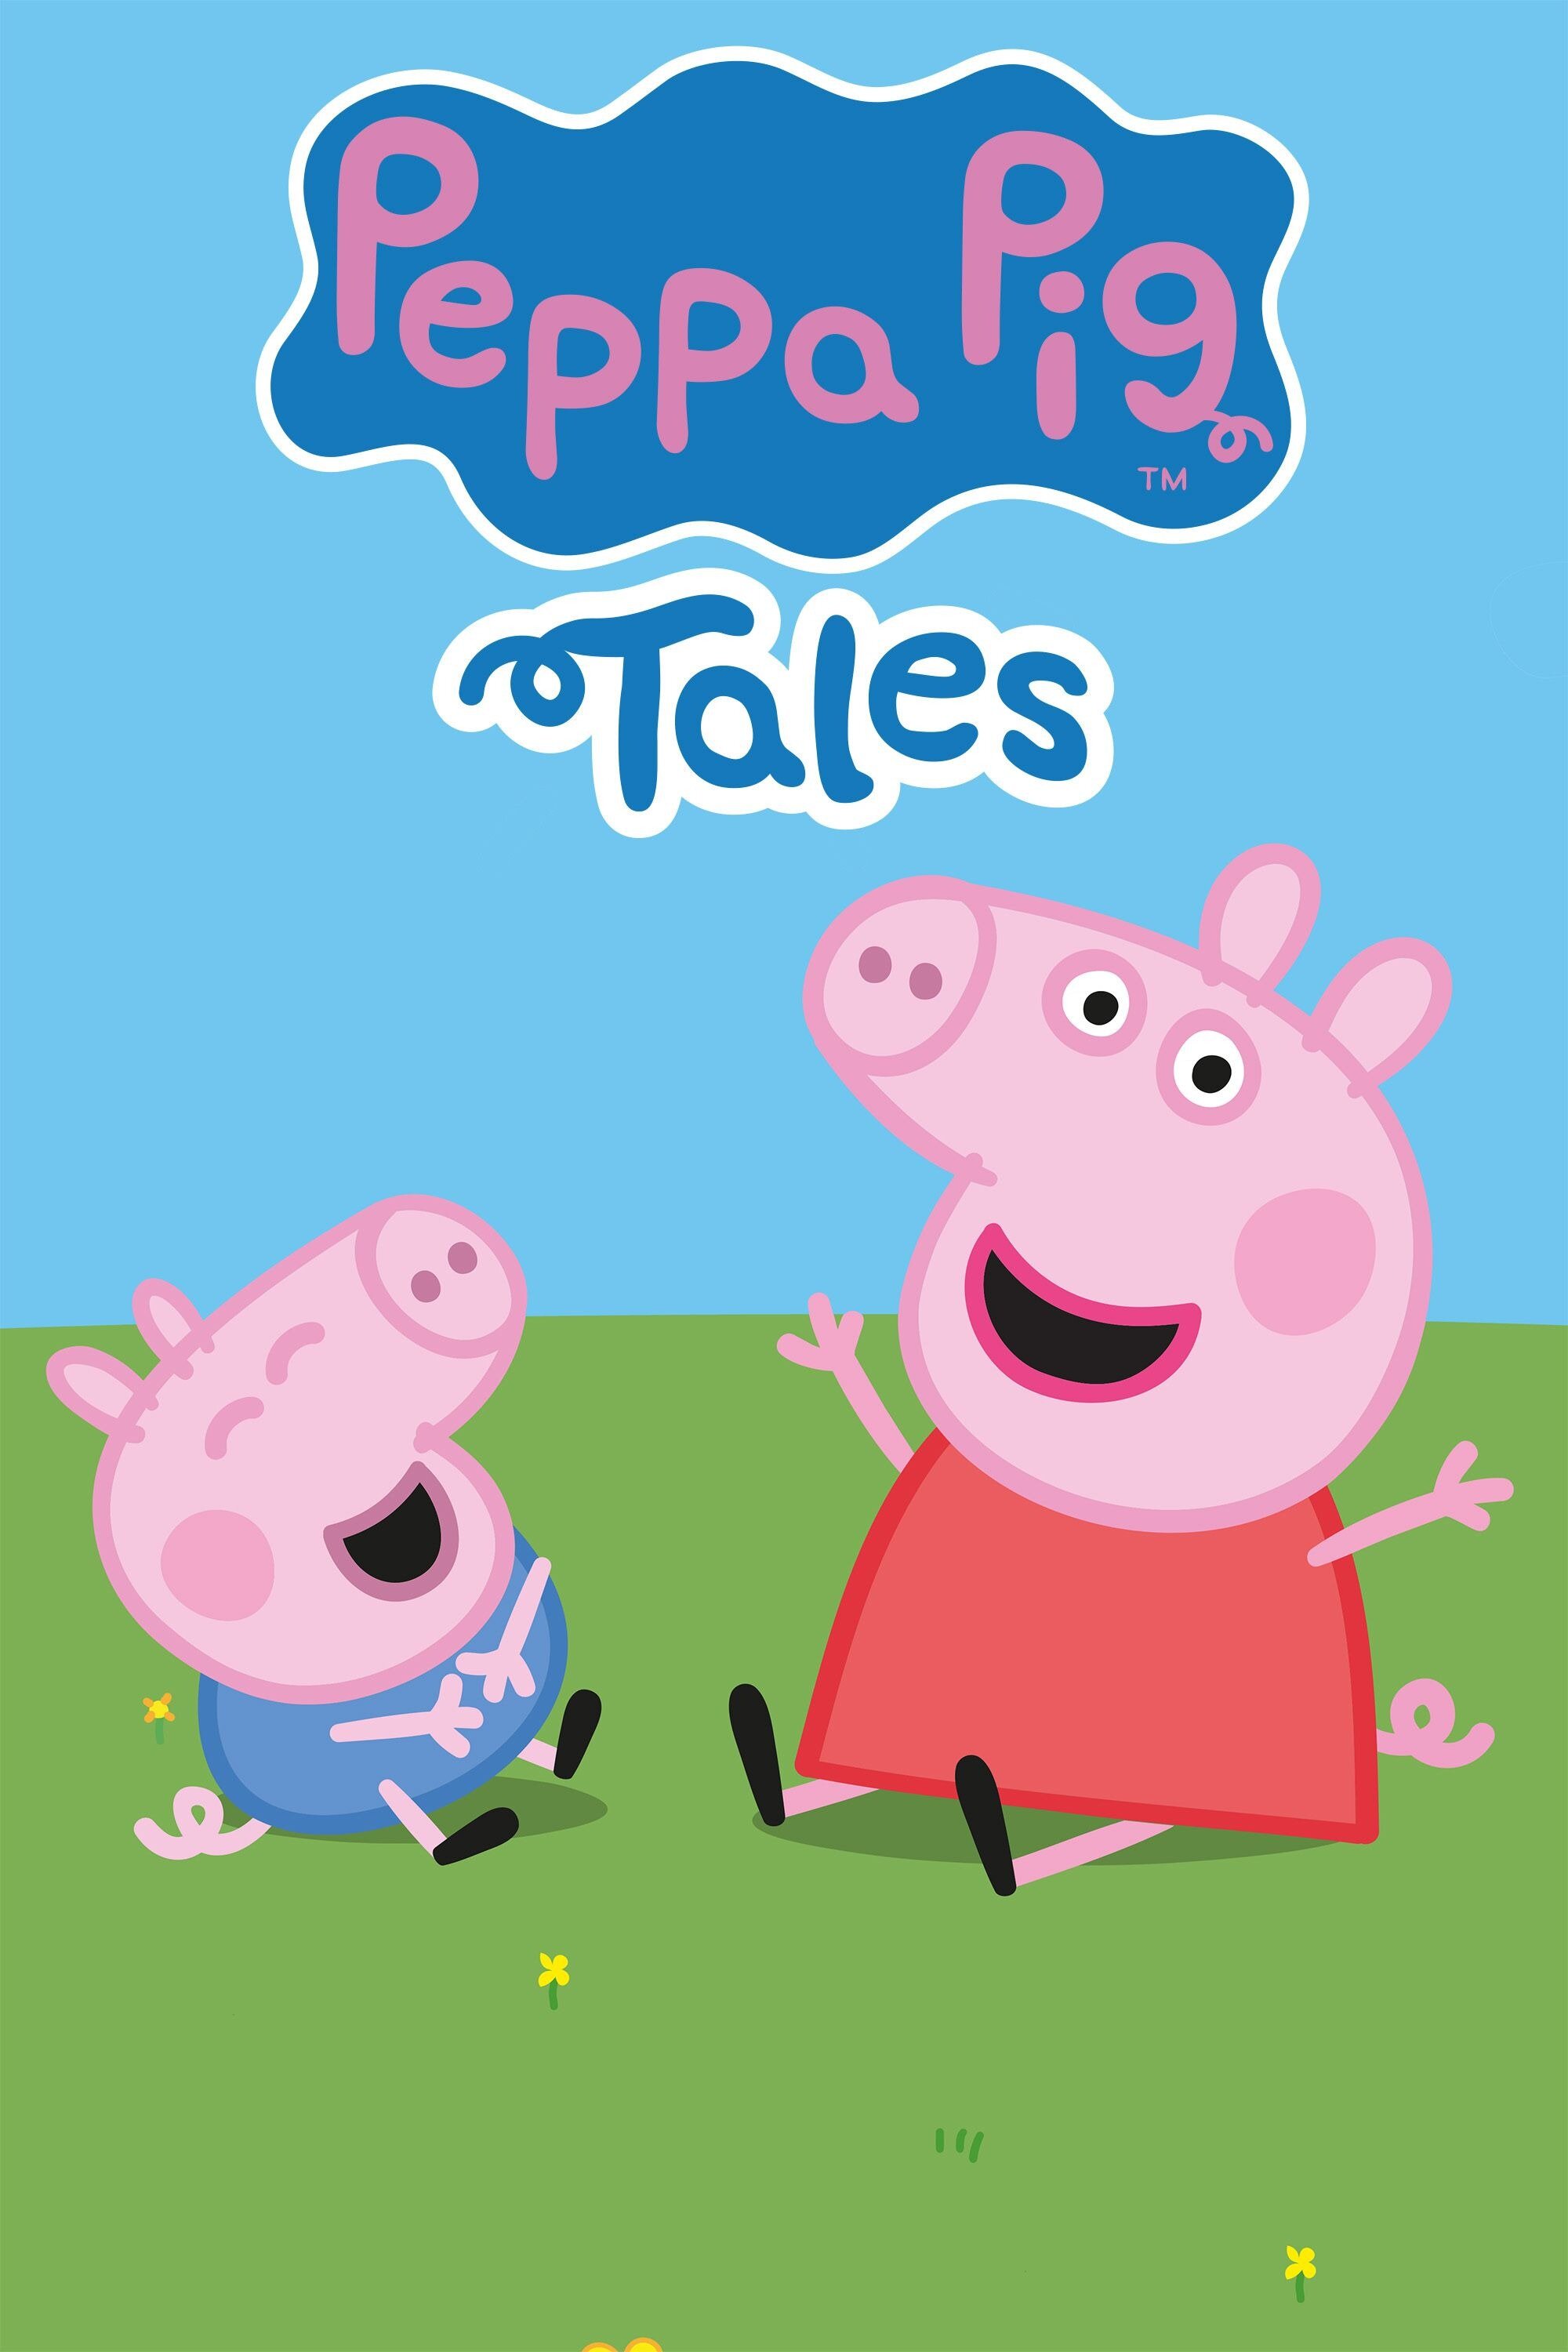 Peppa Pig Tales | TVmaze